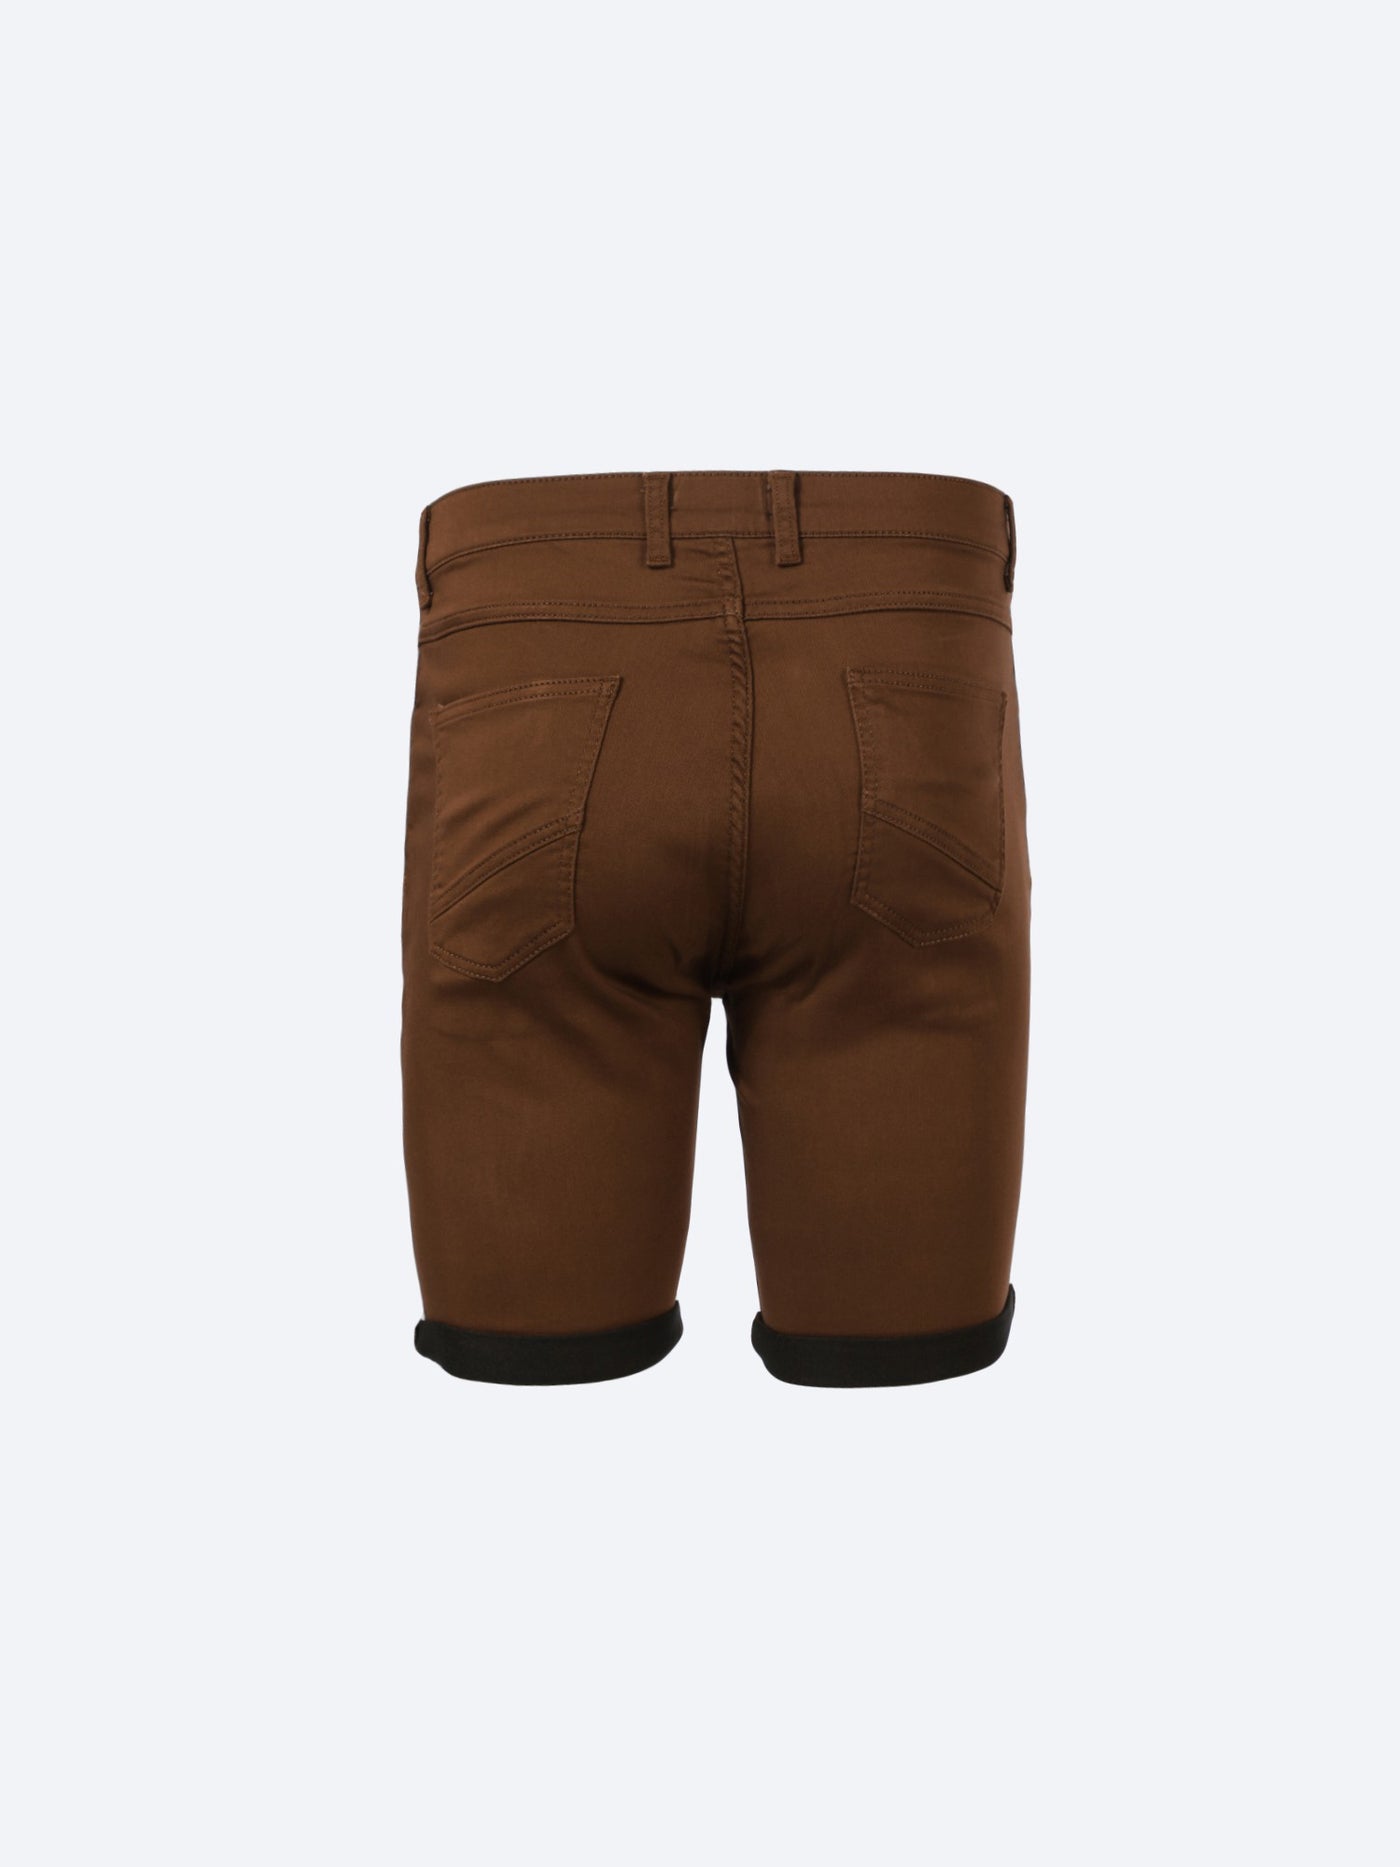 Shorts - Folded Hems - 5 Pocket Design